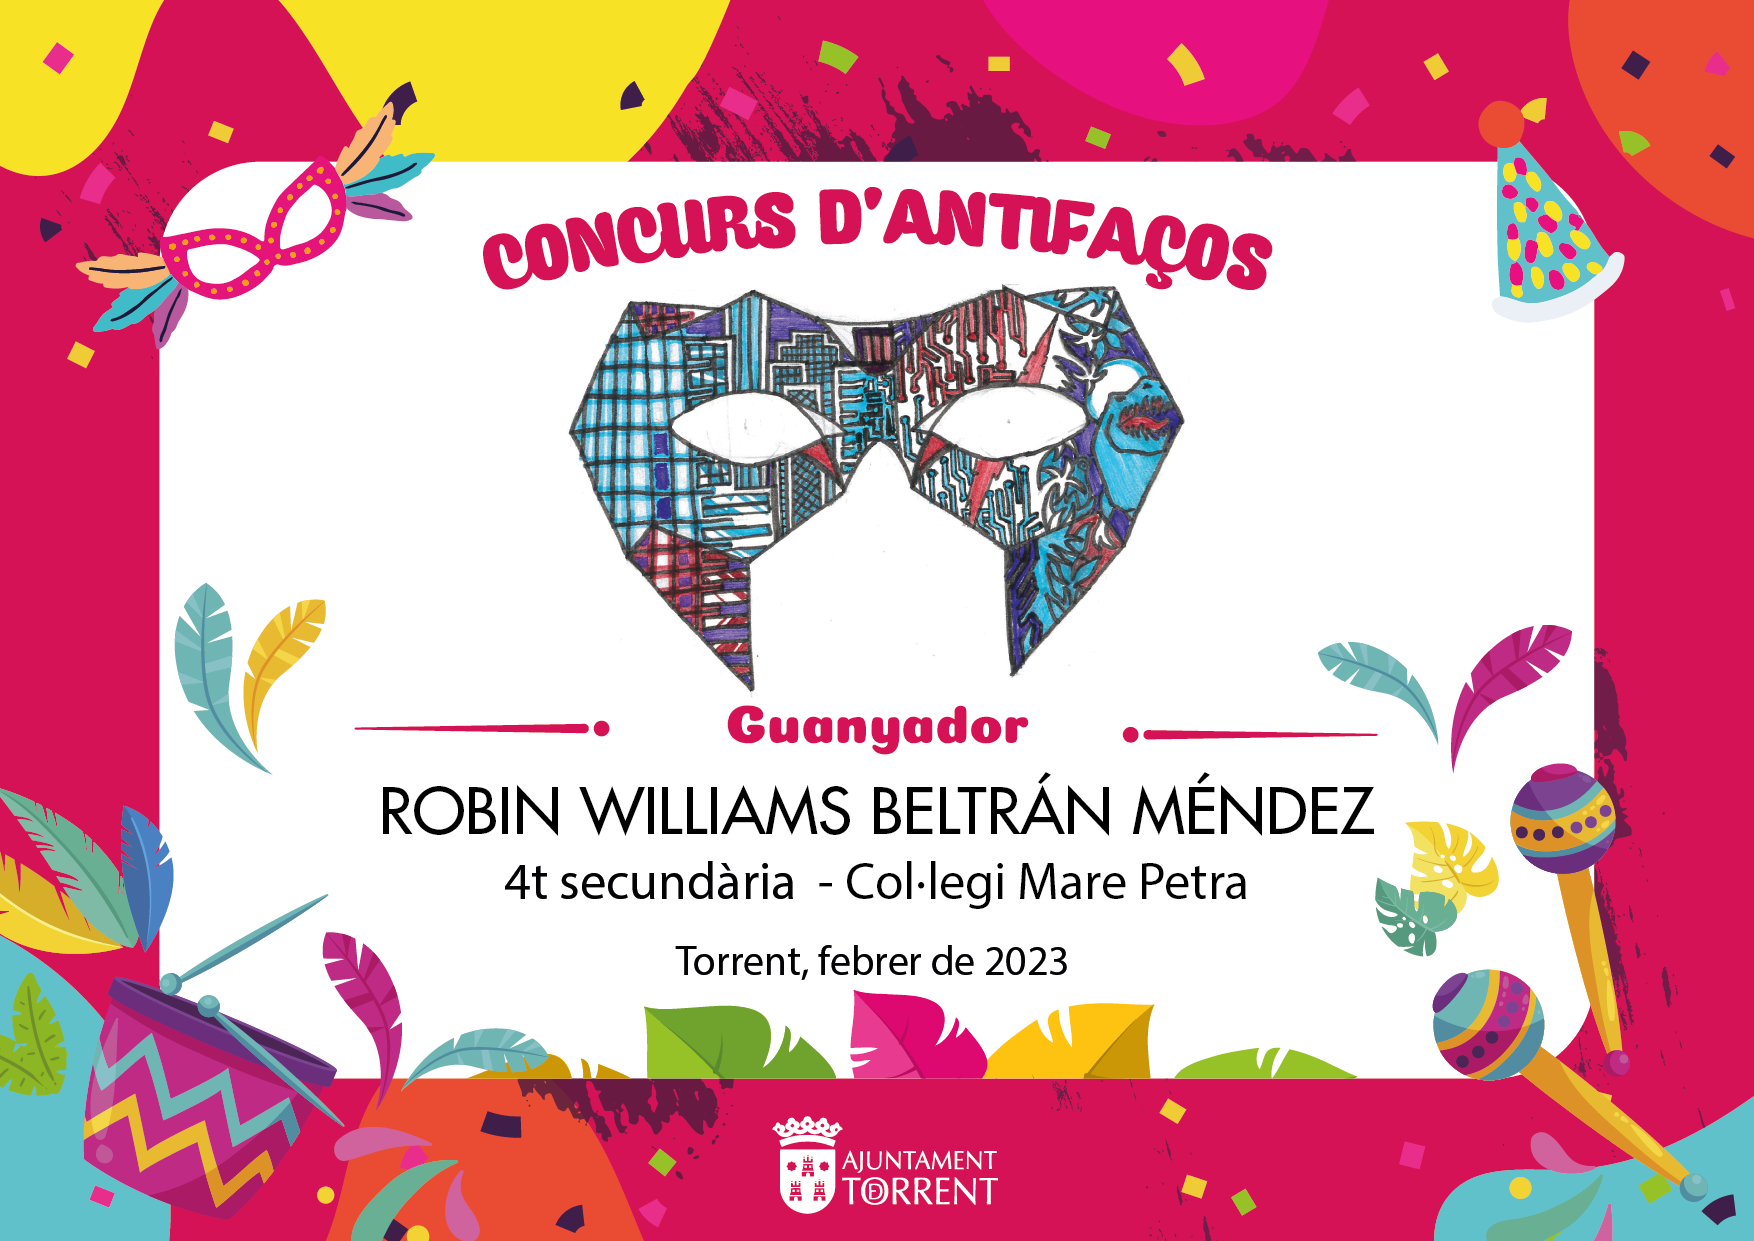 Robin Williams Beltrán Méndez, guanyador del Concurs d’Antifaços de Carnestoltes 2023